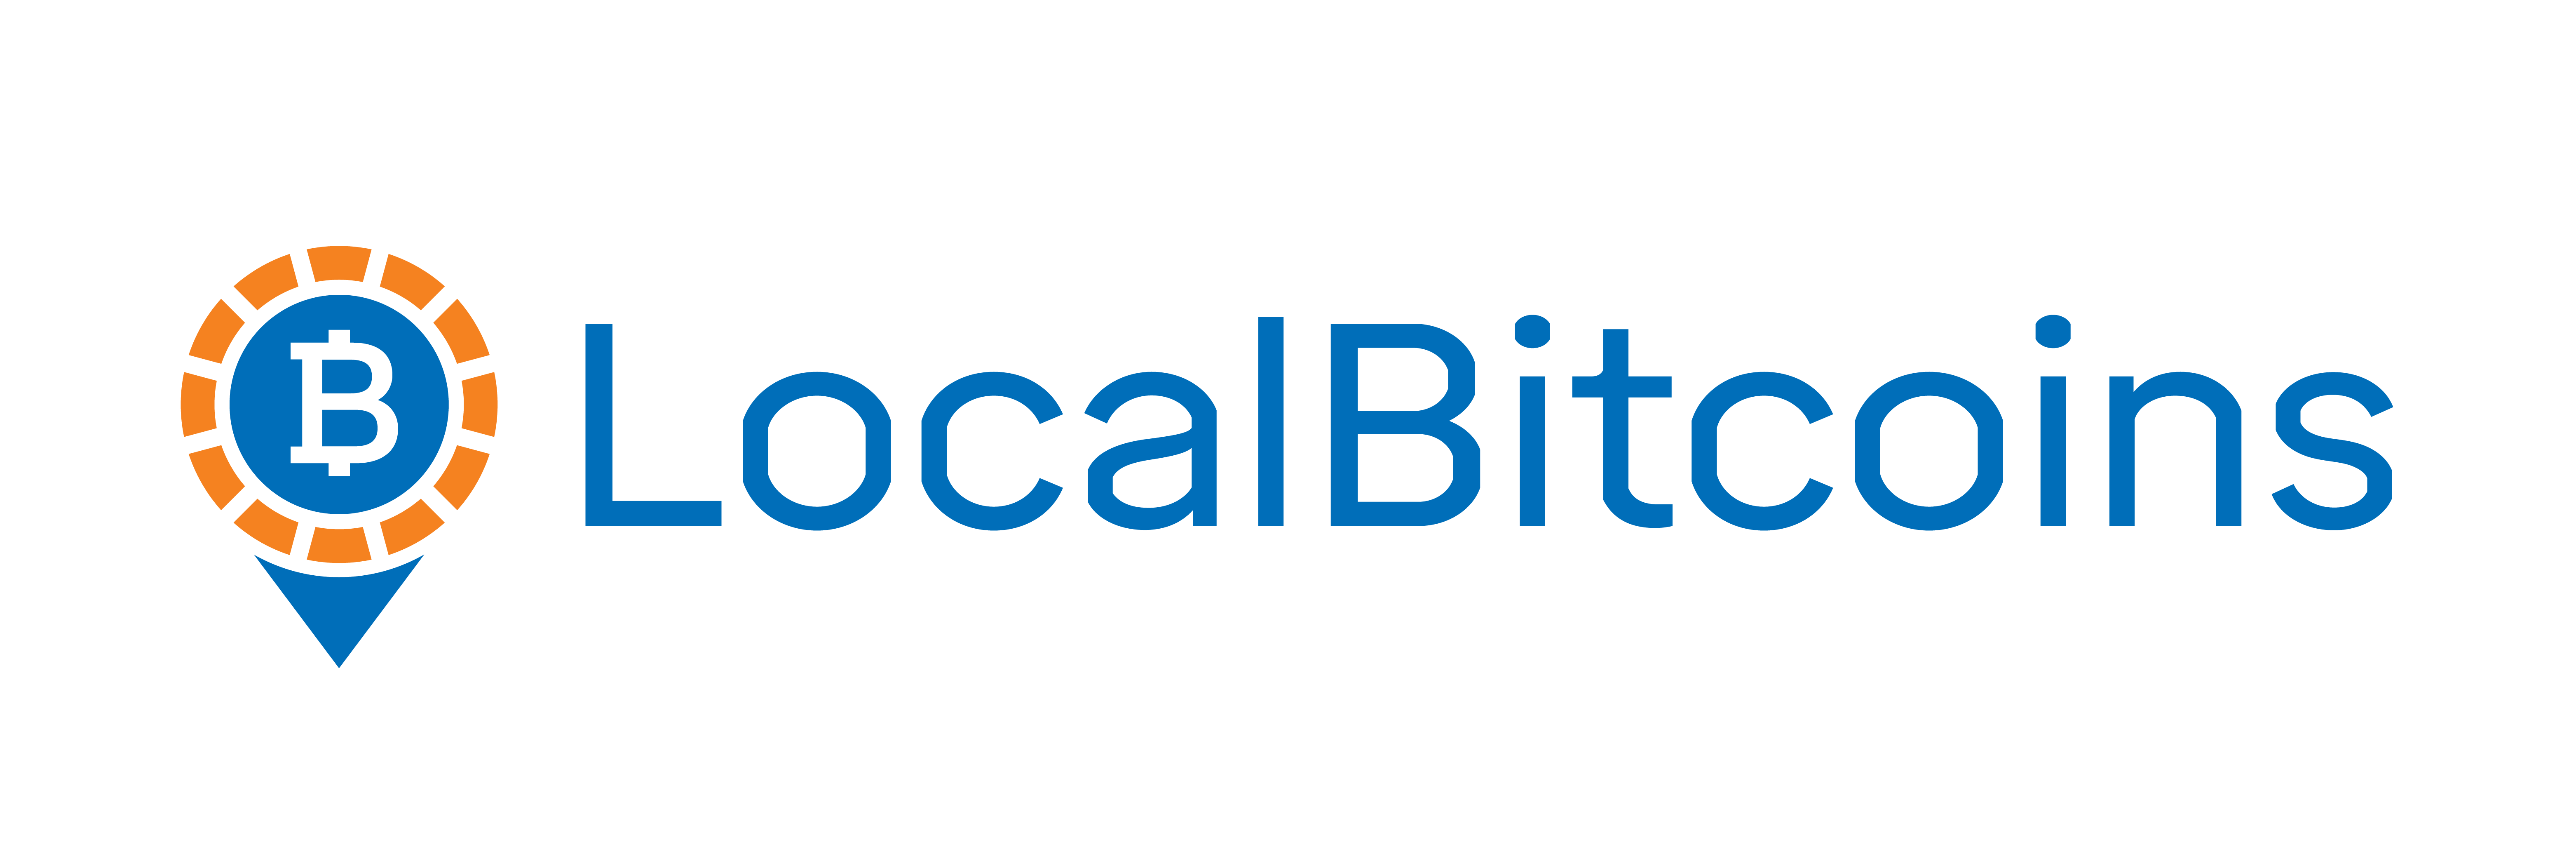 LocalBitcoins logo full